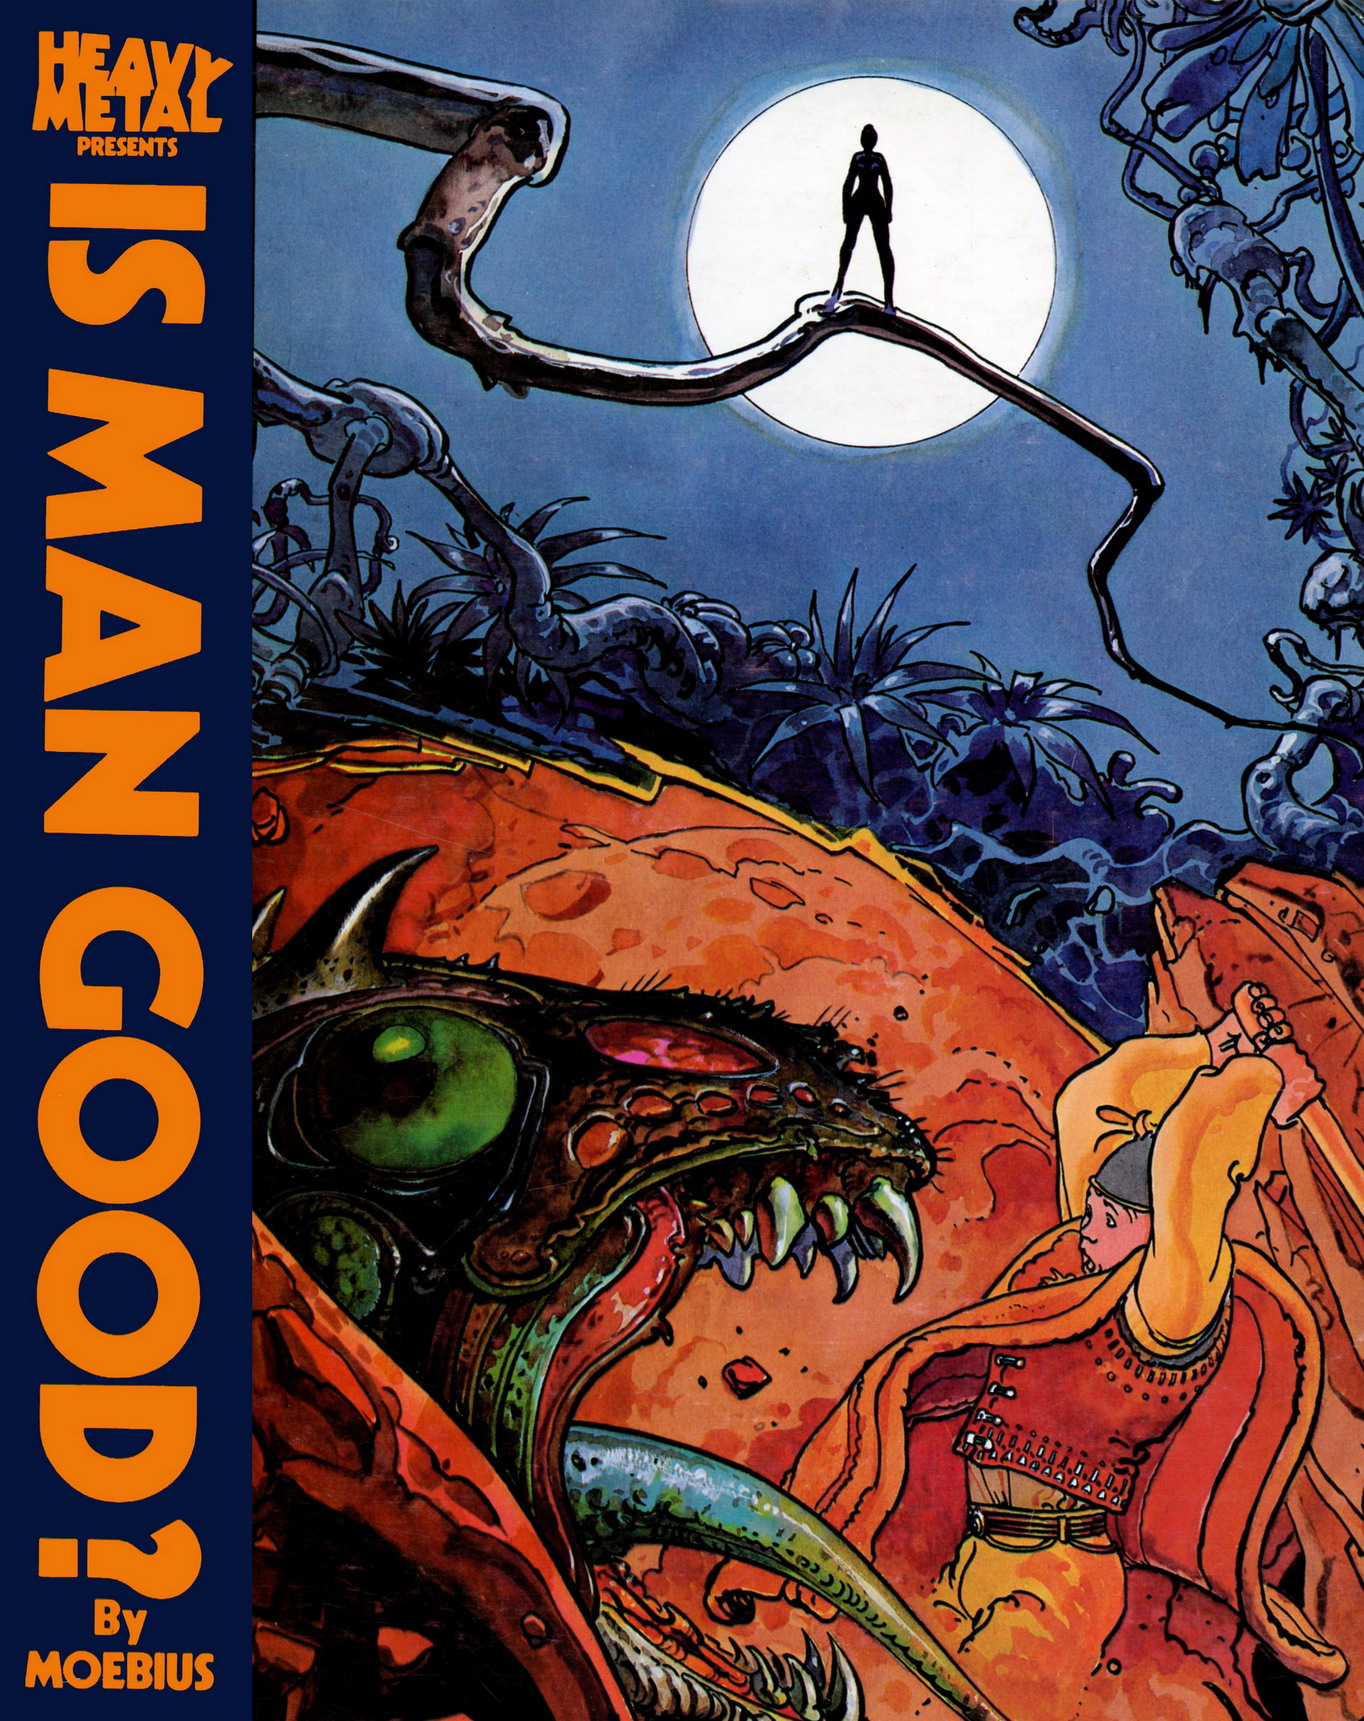 Read online Heavy Metal Presents Is Man Good? comic -  Issue # Full - 1